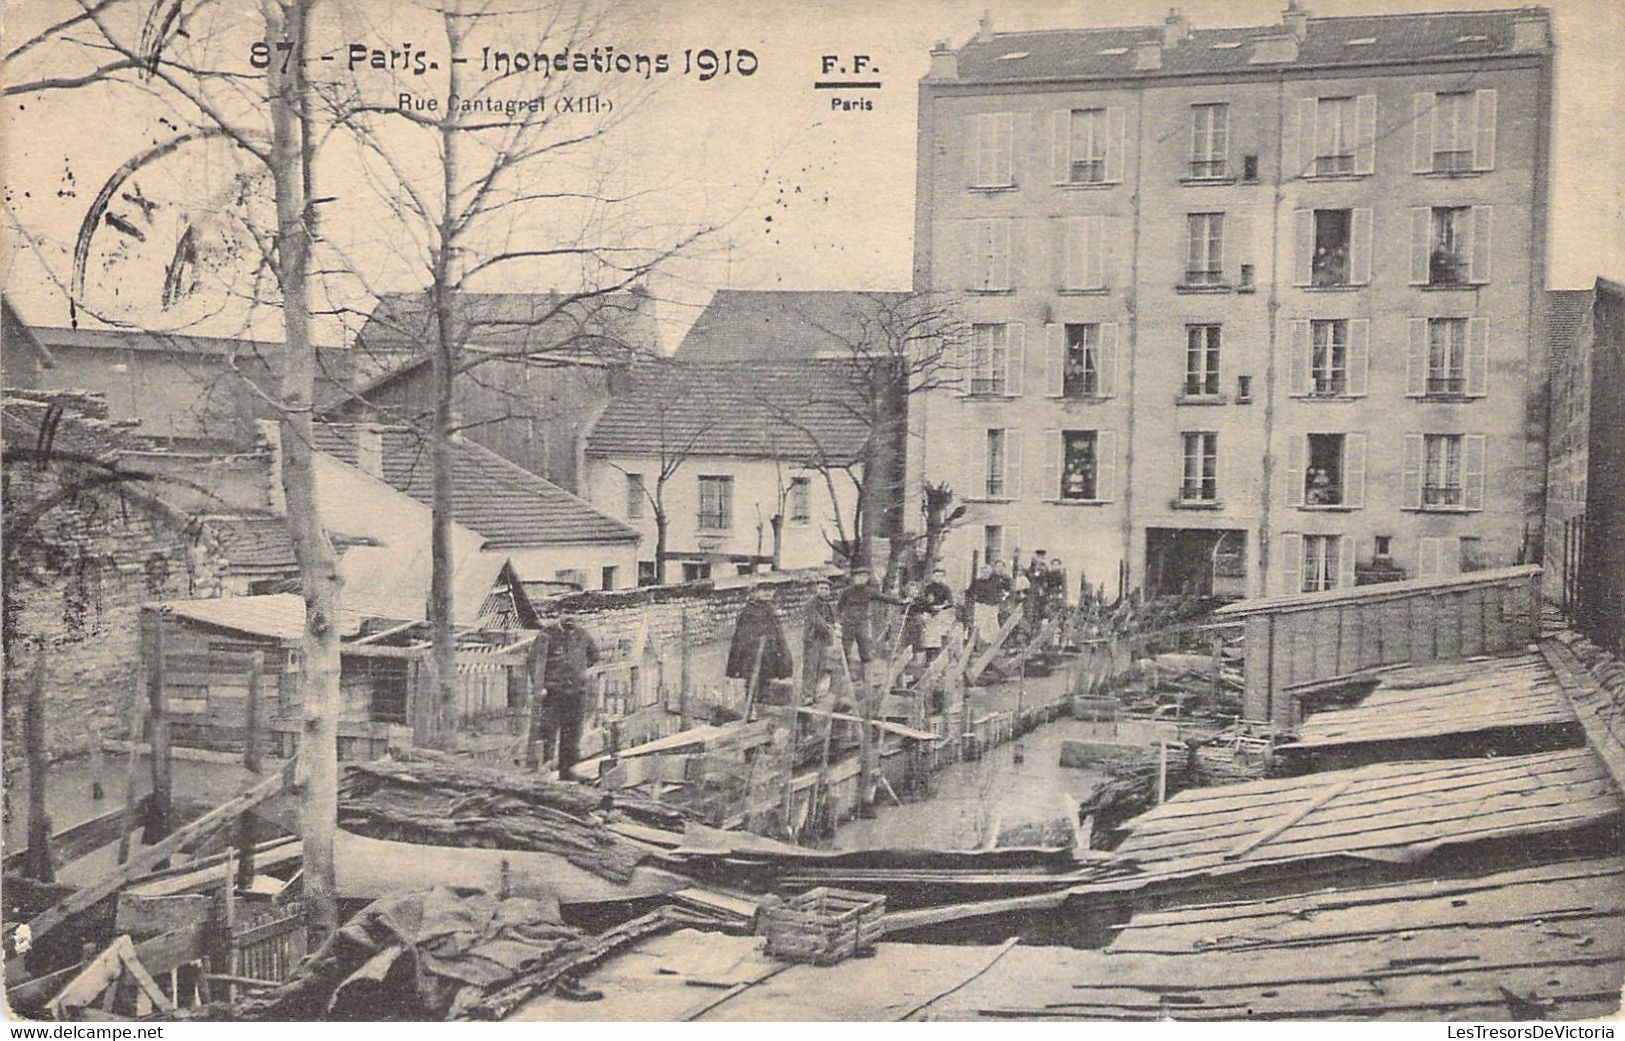 CPA France - Paris - Inondations De 1910 - Rue Cantagrel - XIIIe - F. F. Paris - Oblitérée Bruxelles 1910 - Alluvioni Del 1910